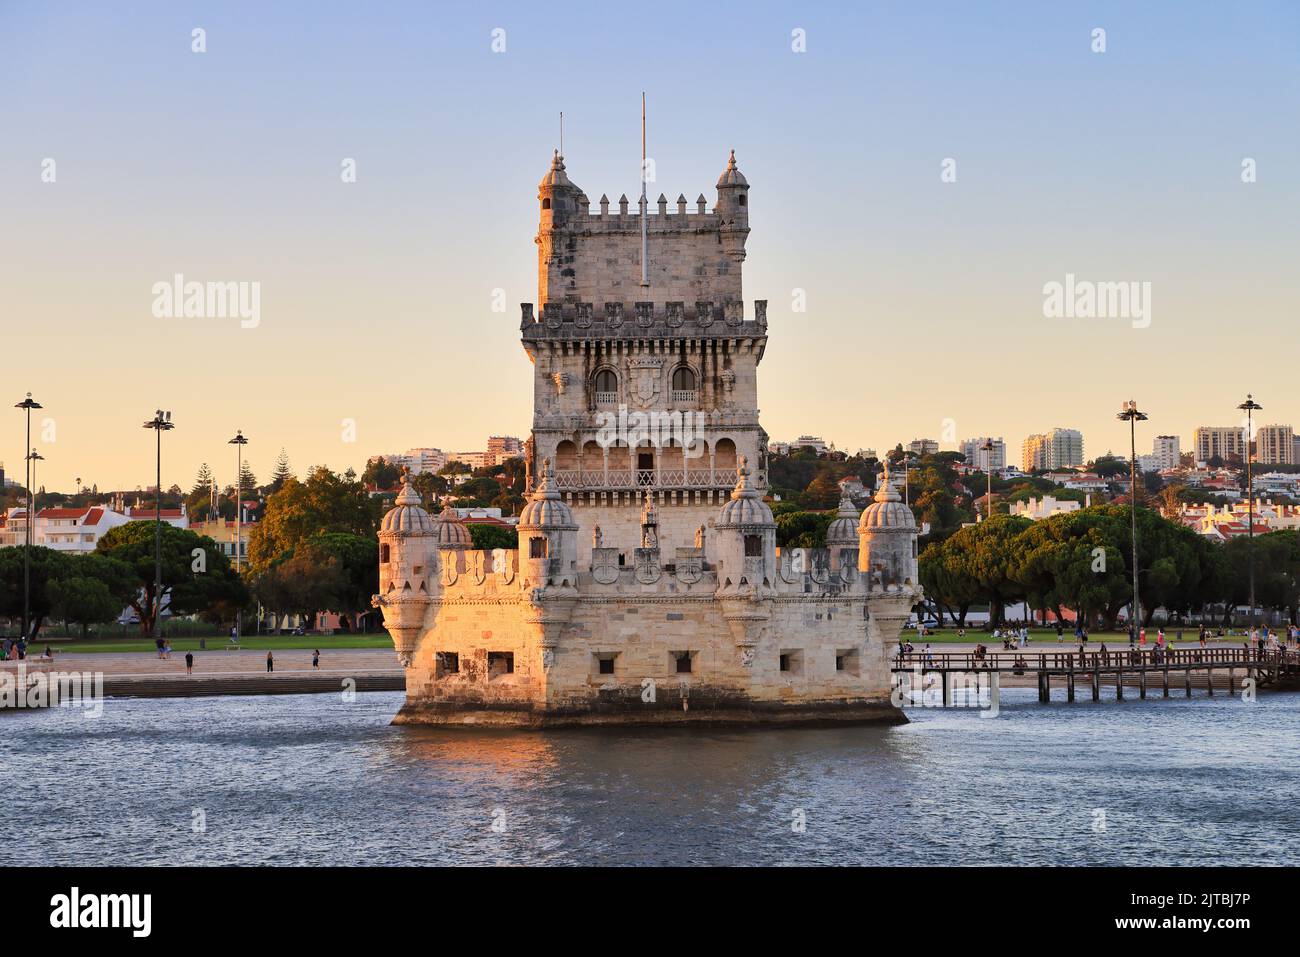 Belém-Turm, Torre de Belém in Belém, Lissabon, Portugal. Festung aus dem 16.. Jahrhundert, vom Fluss Tejo aus gesehen. UNESCO-Weltkulturerbe. Stockfoto